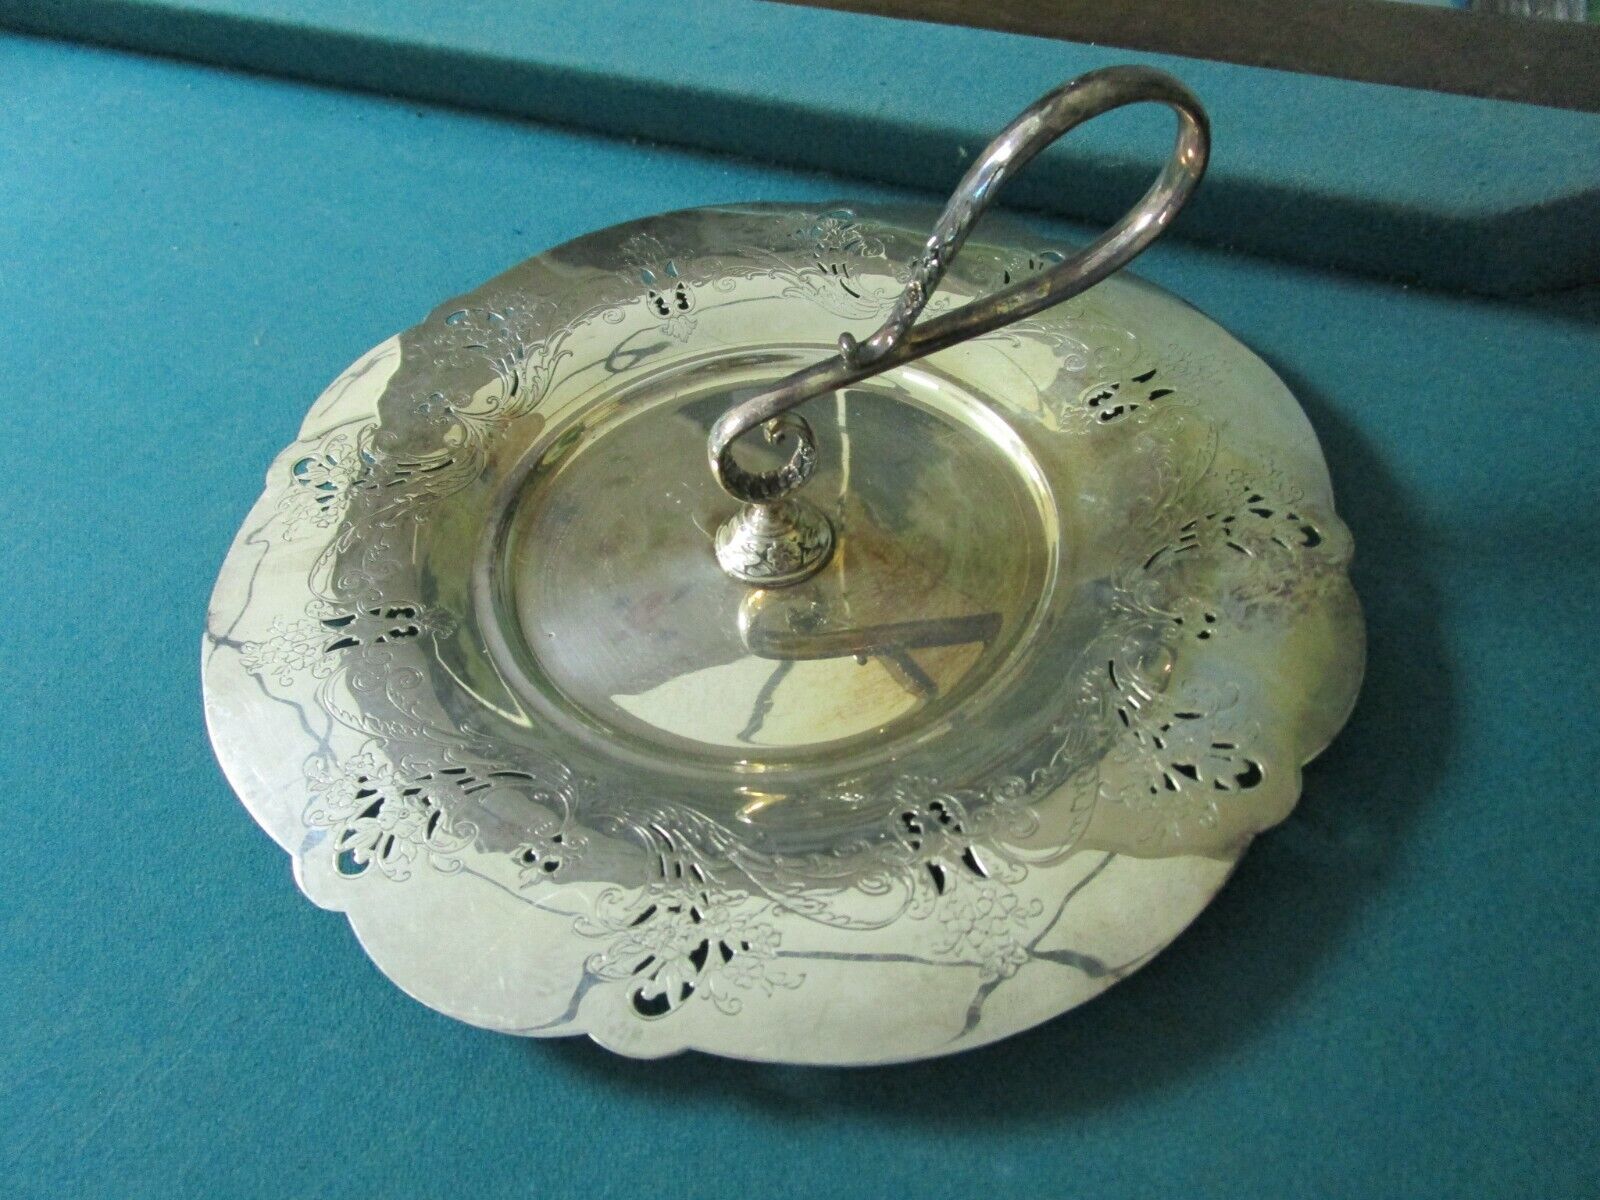 Antique Wm Roger Marigold Silver plate with center handle, gorgeous original - $74.25